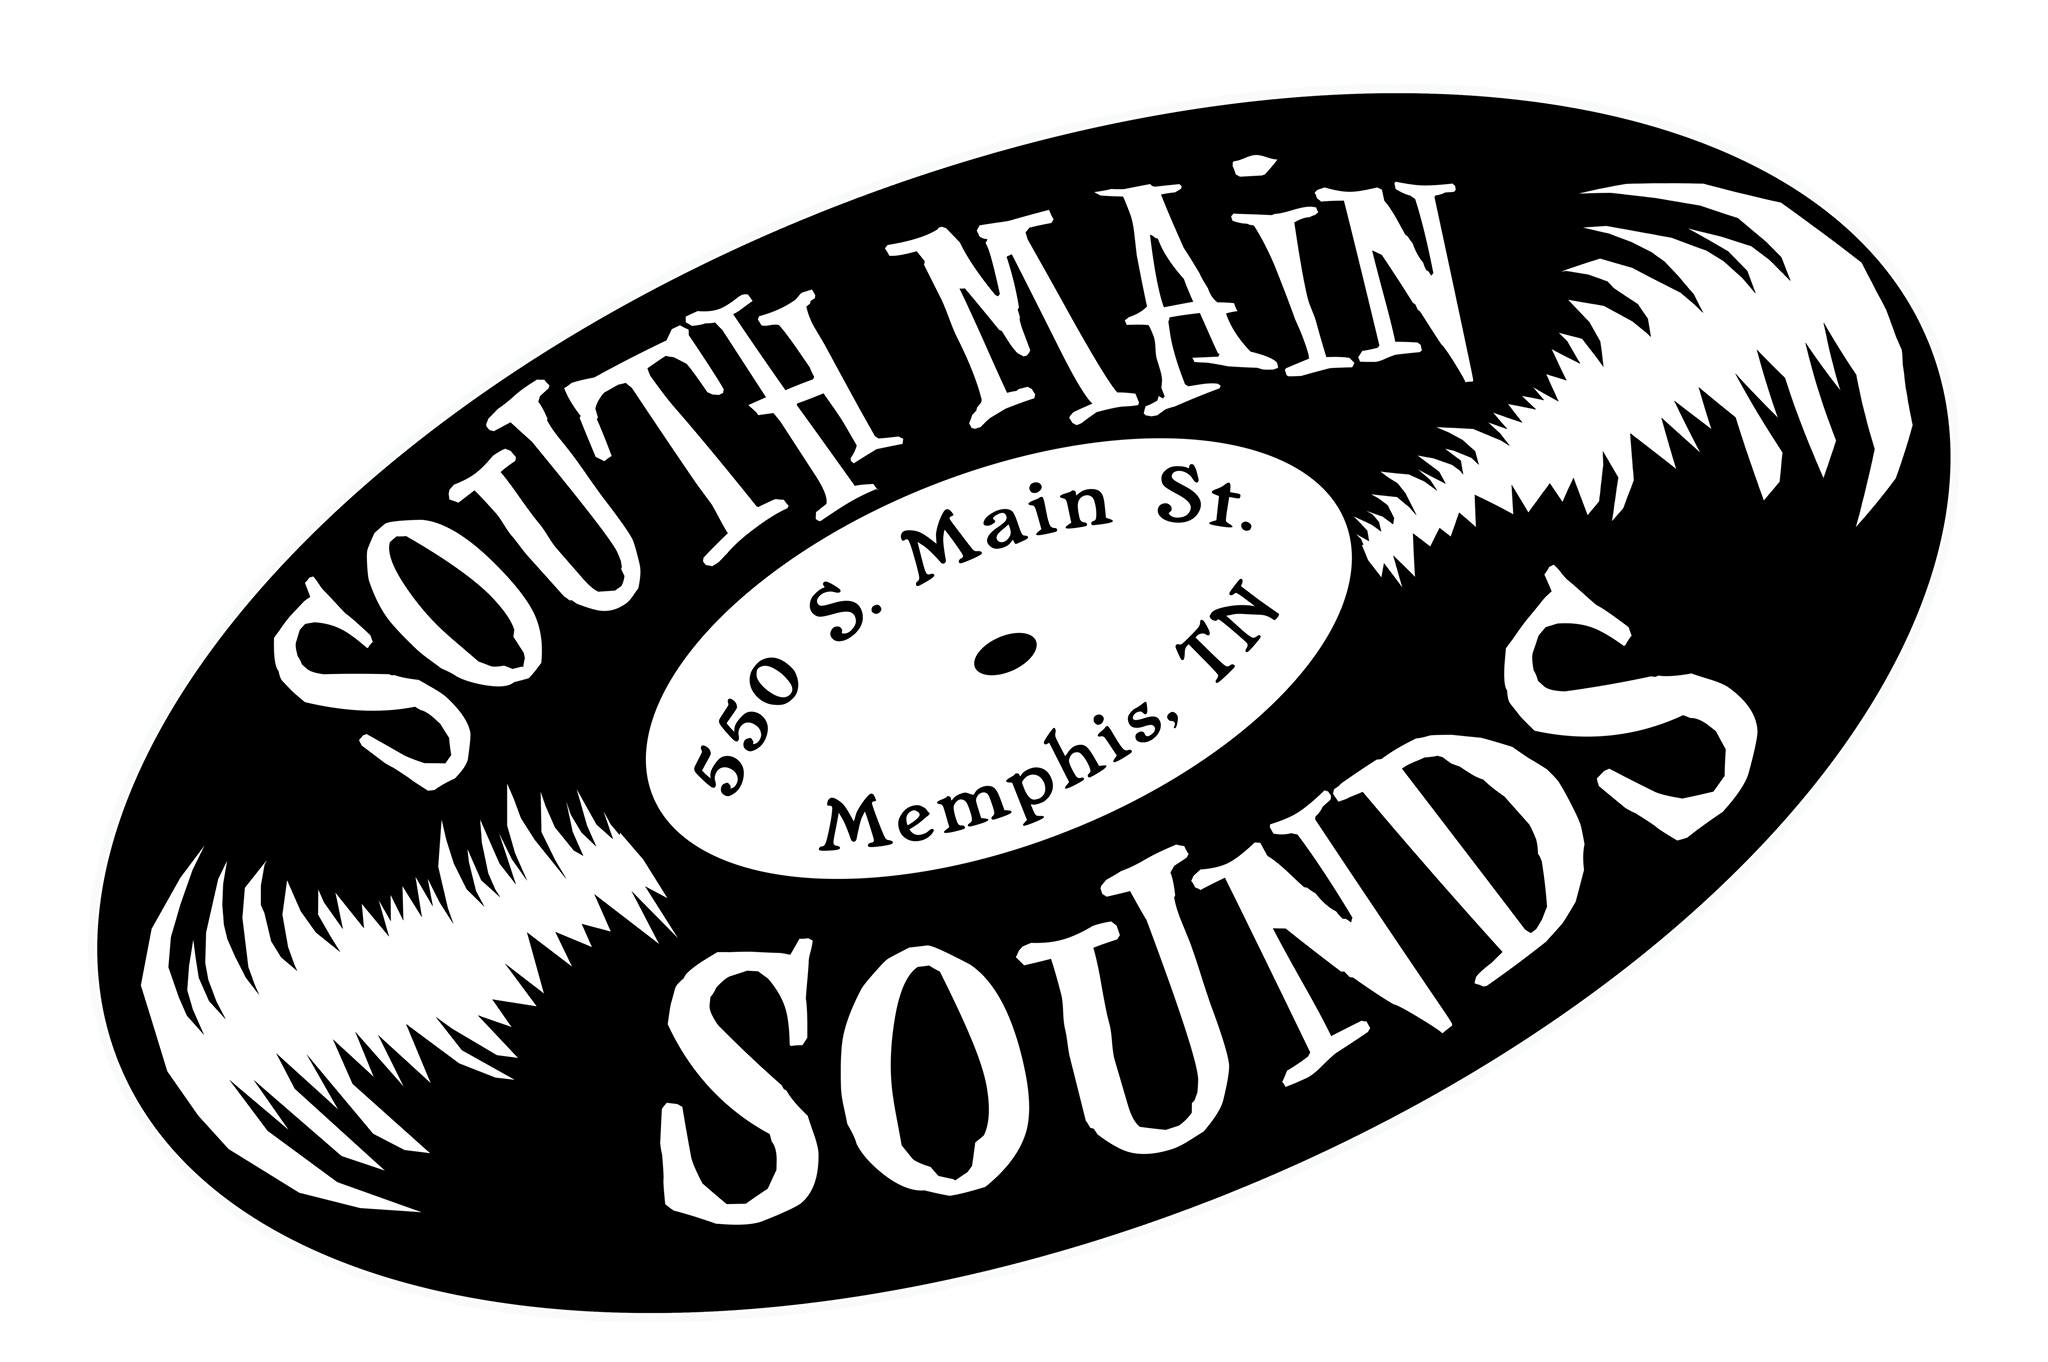 South Main Sounds